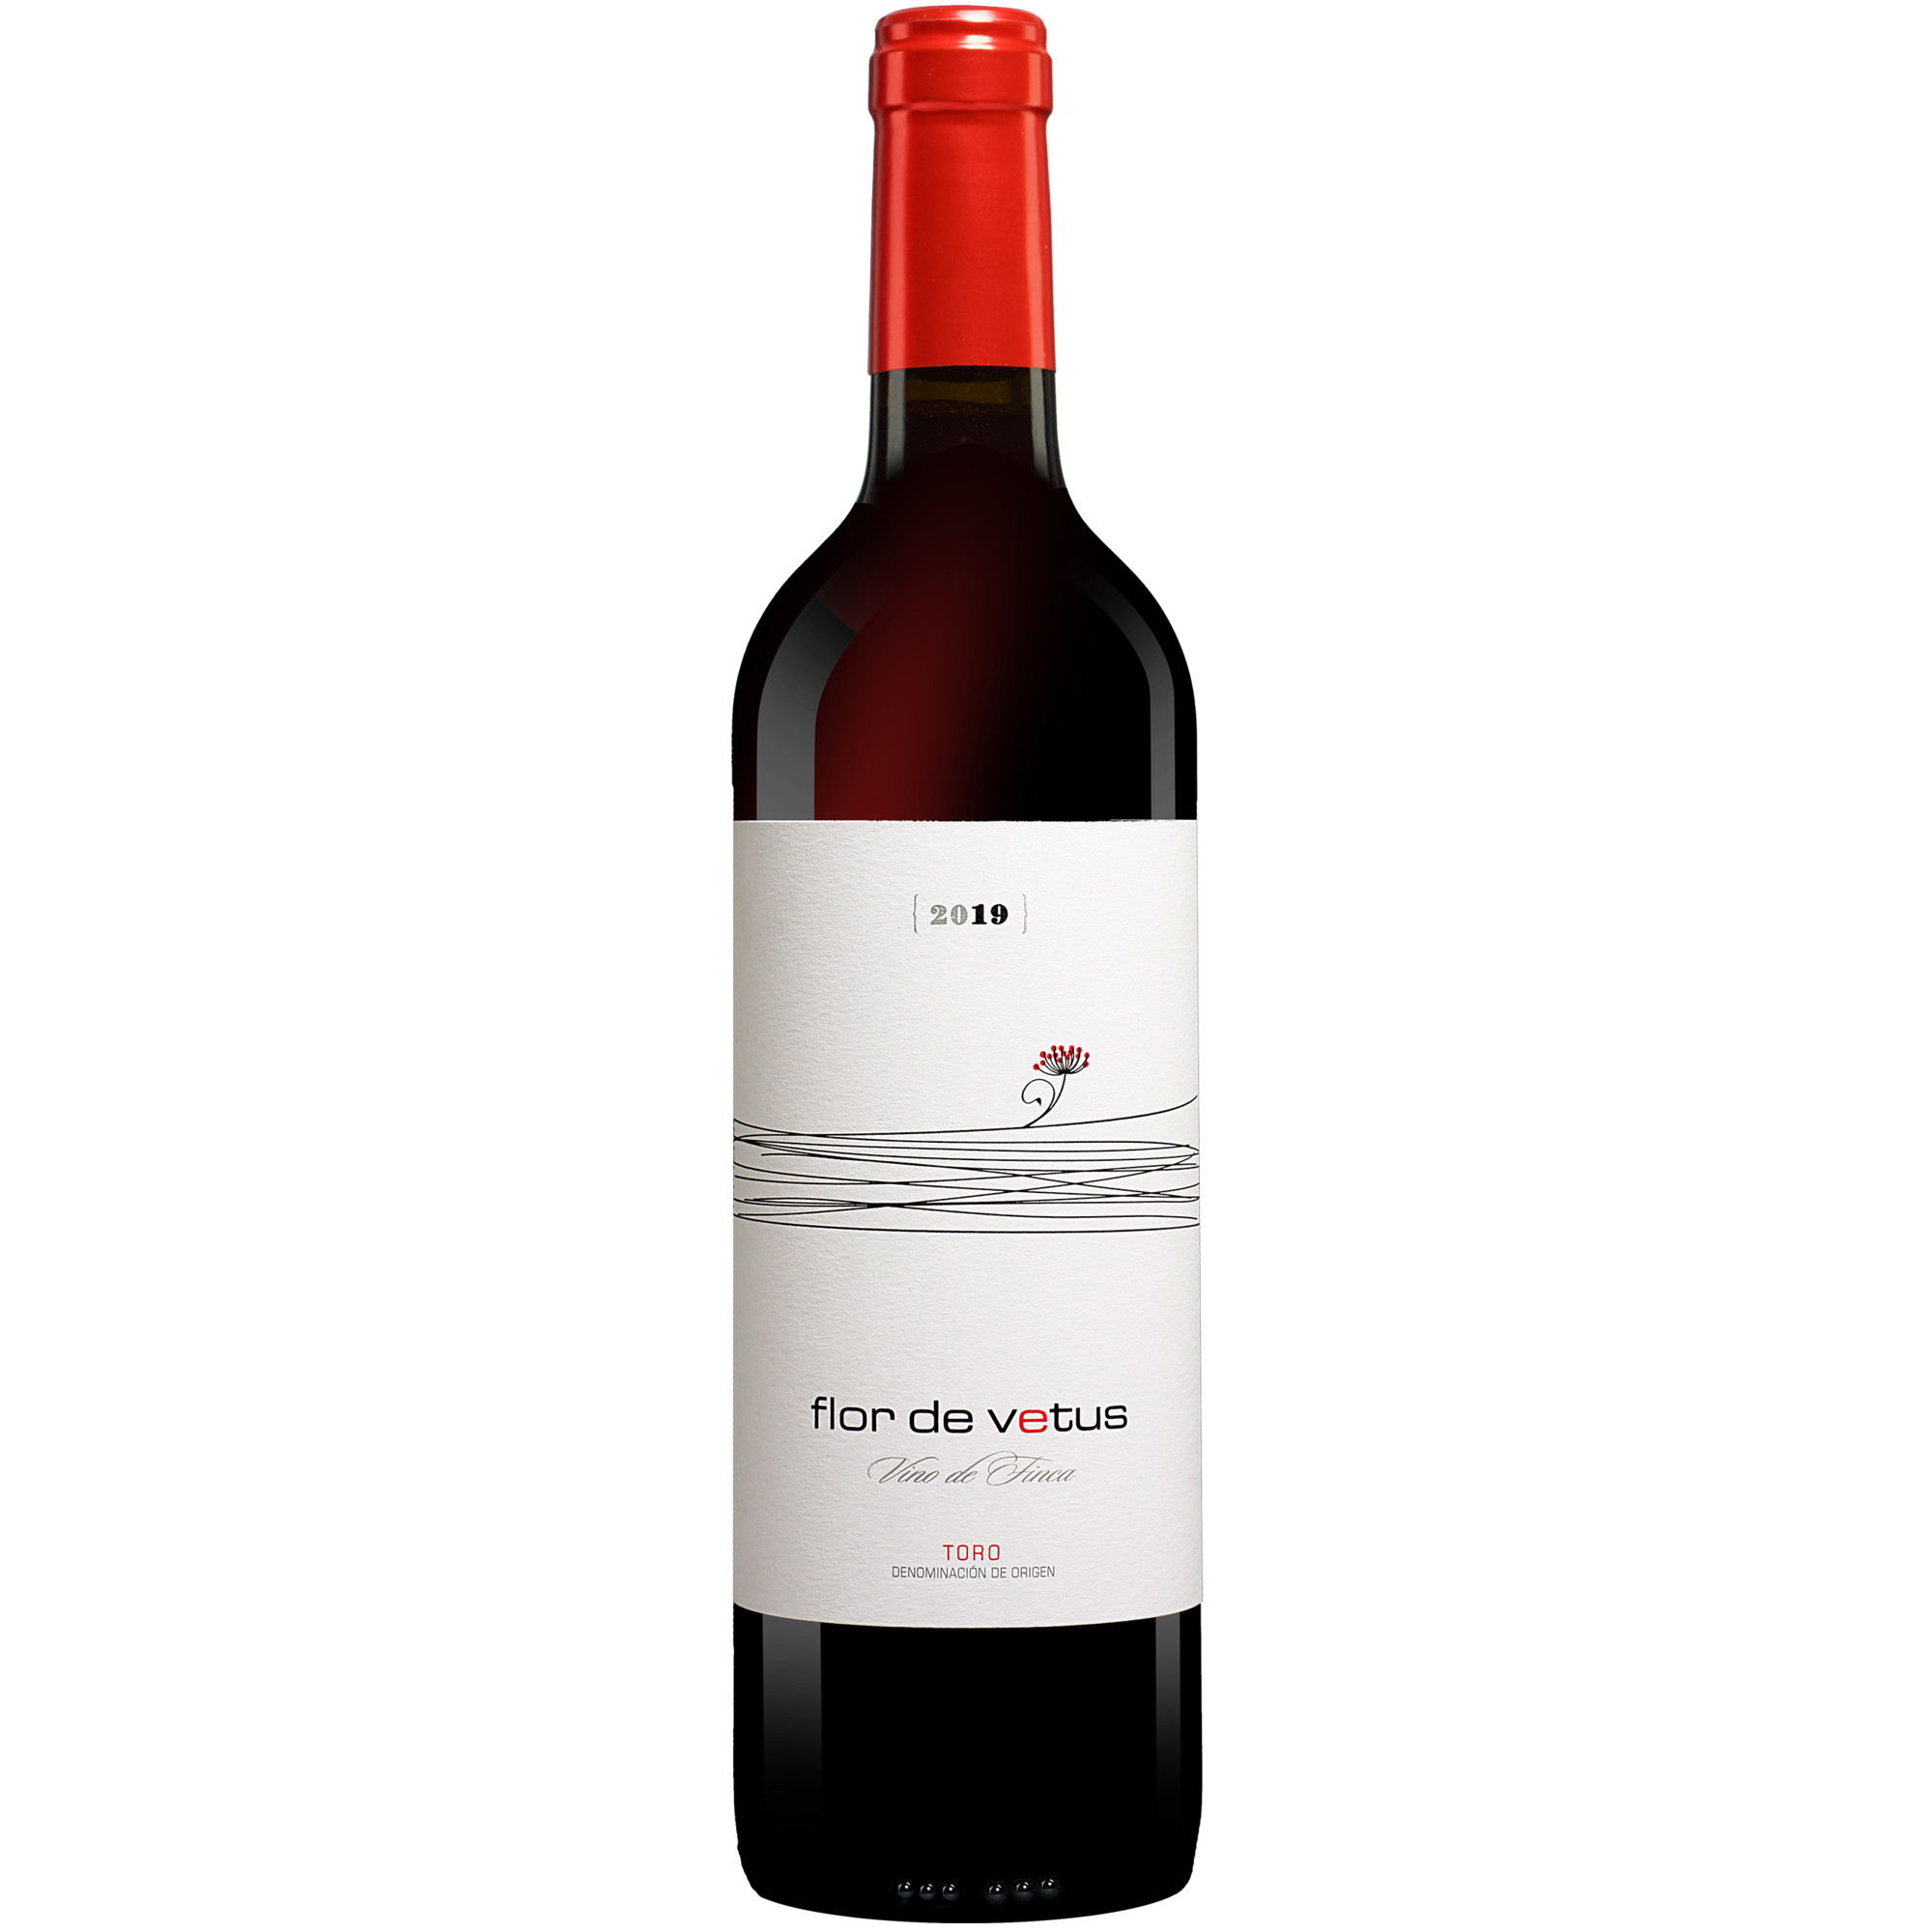 Vetus »Flor de Vetus« 2019  014.5% Vol. Rotwein Trocken aus Spanien